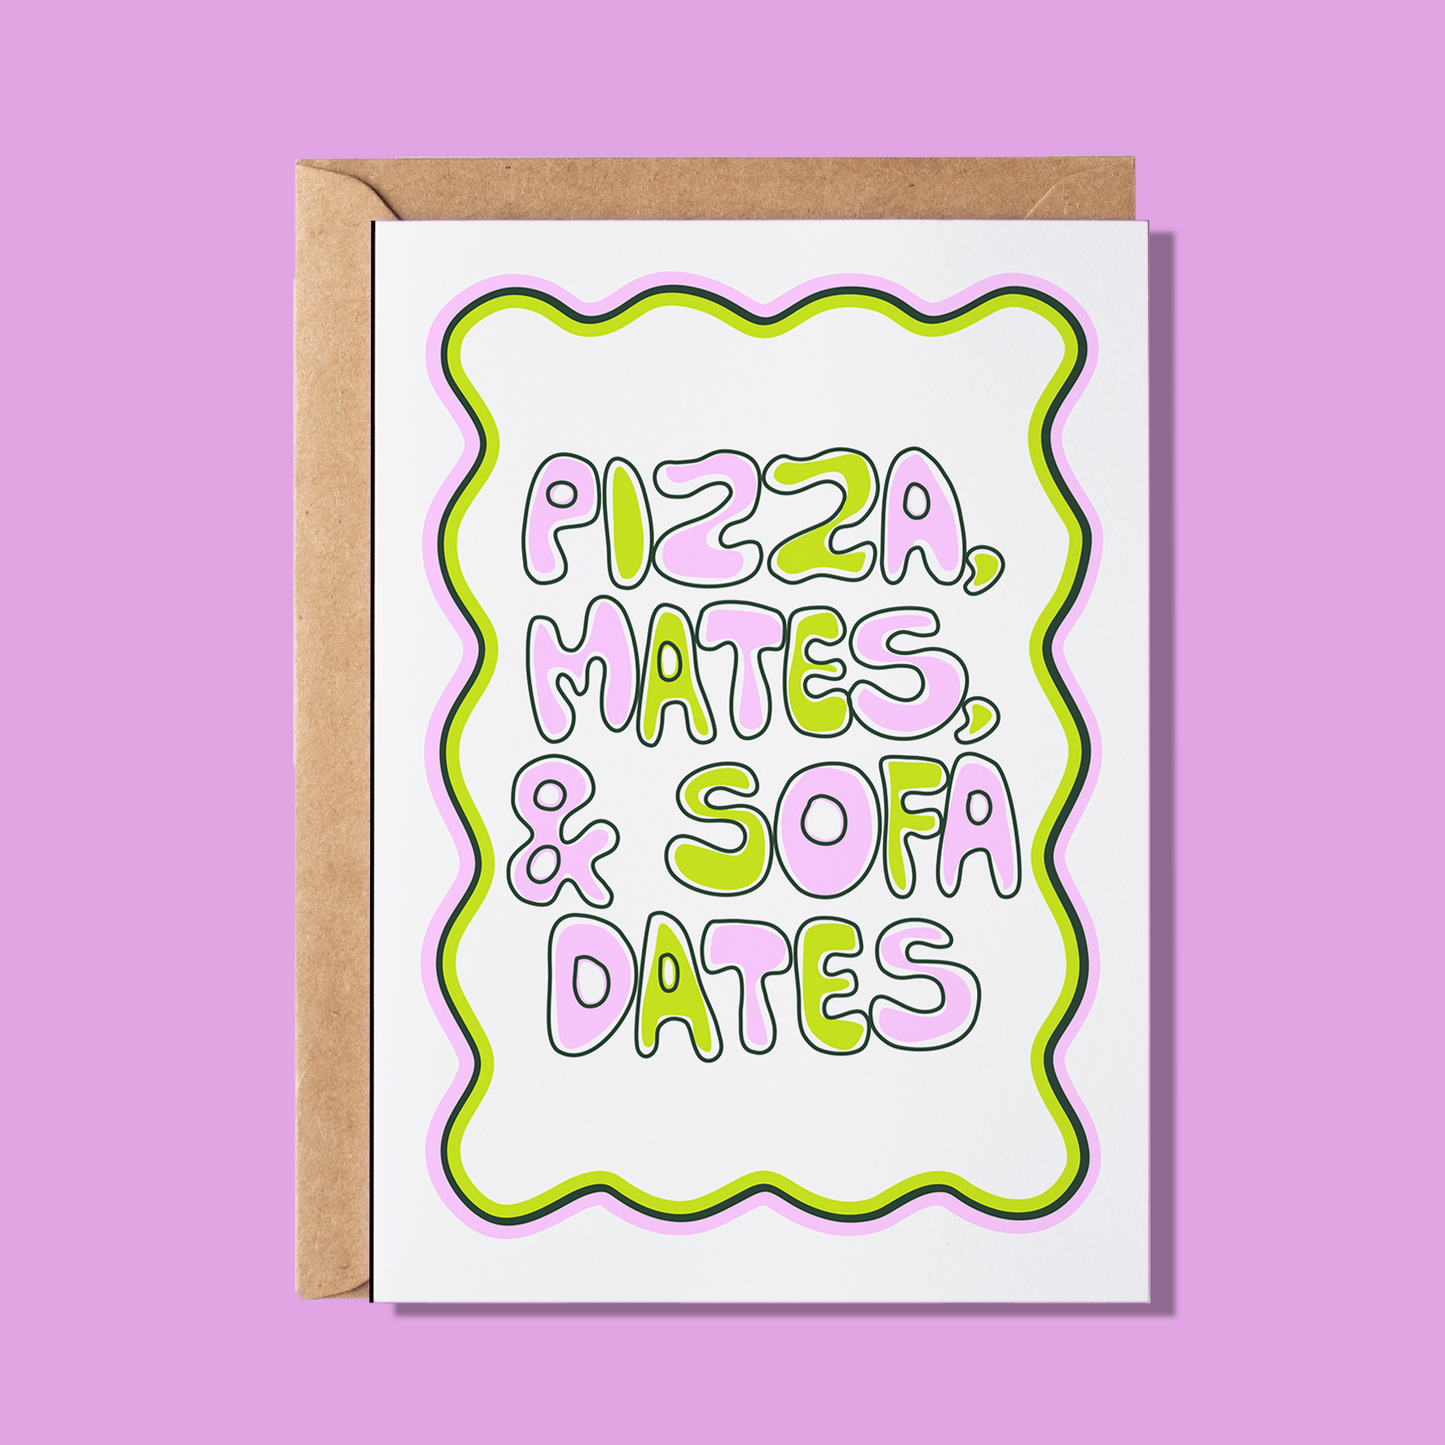 Pizza, Mates & Sofa Dates Greeting Card